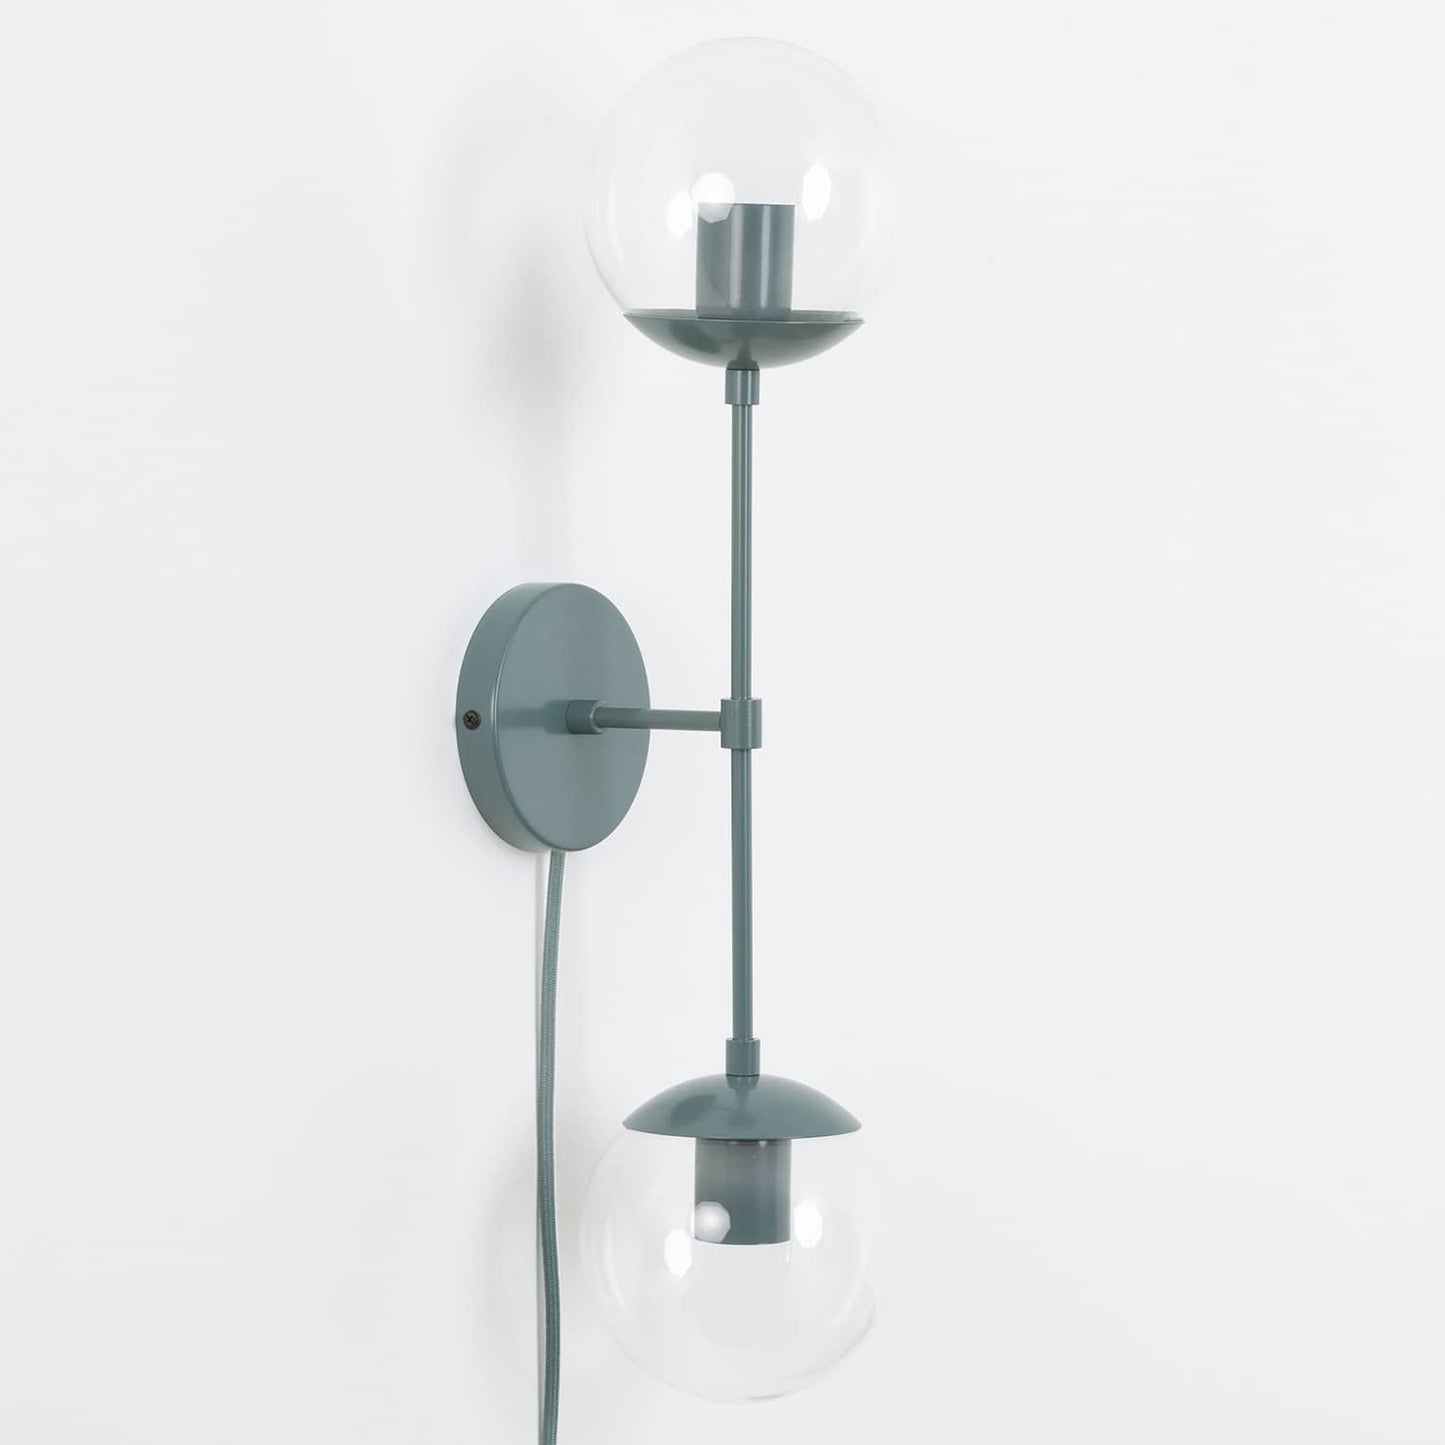 Mod Glass Double Globe Plug-In Sconce